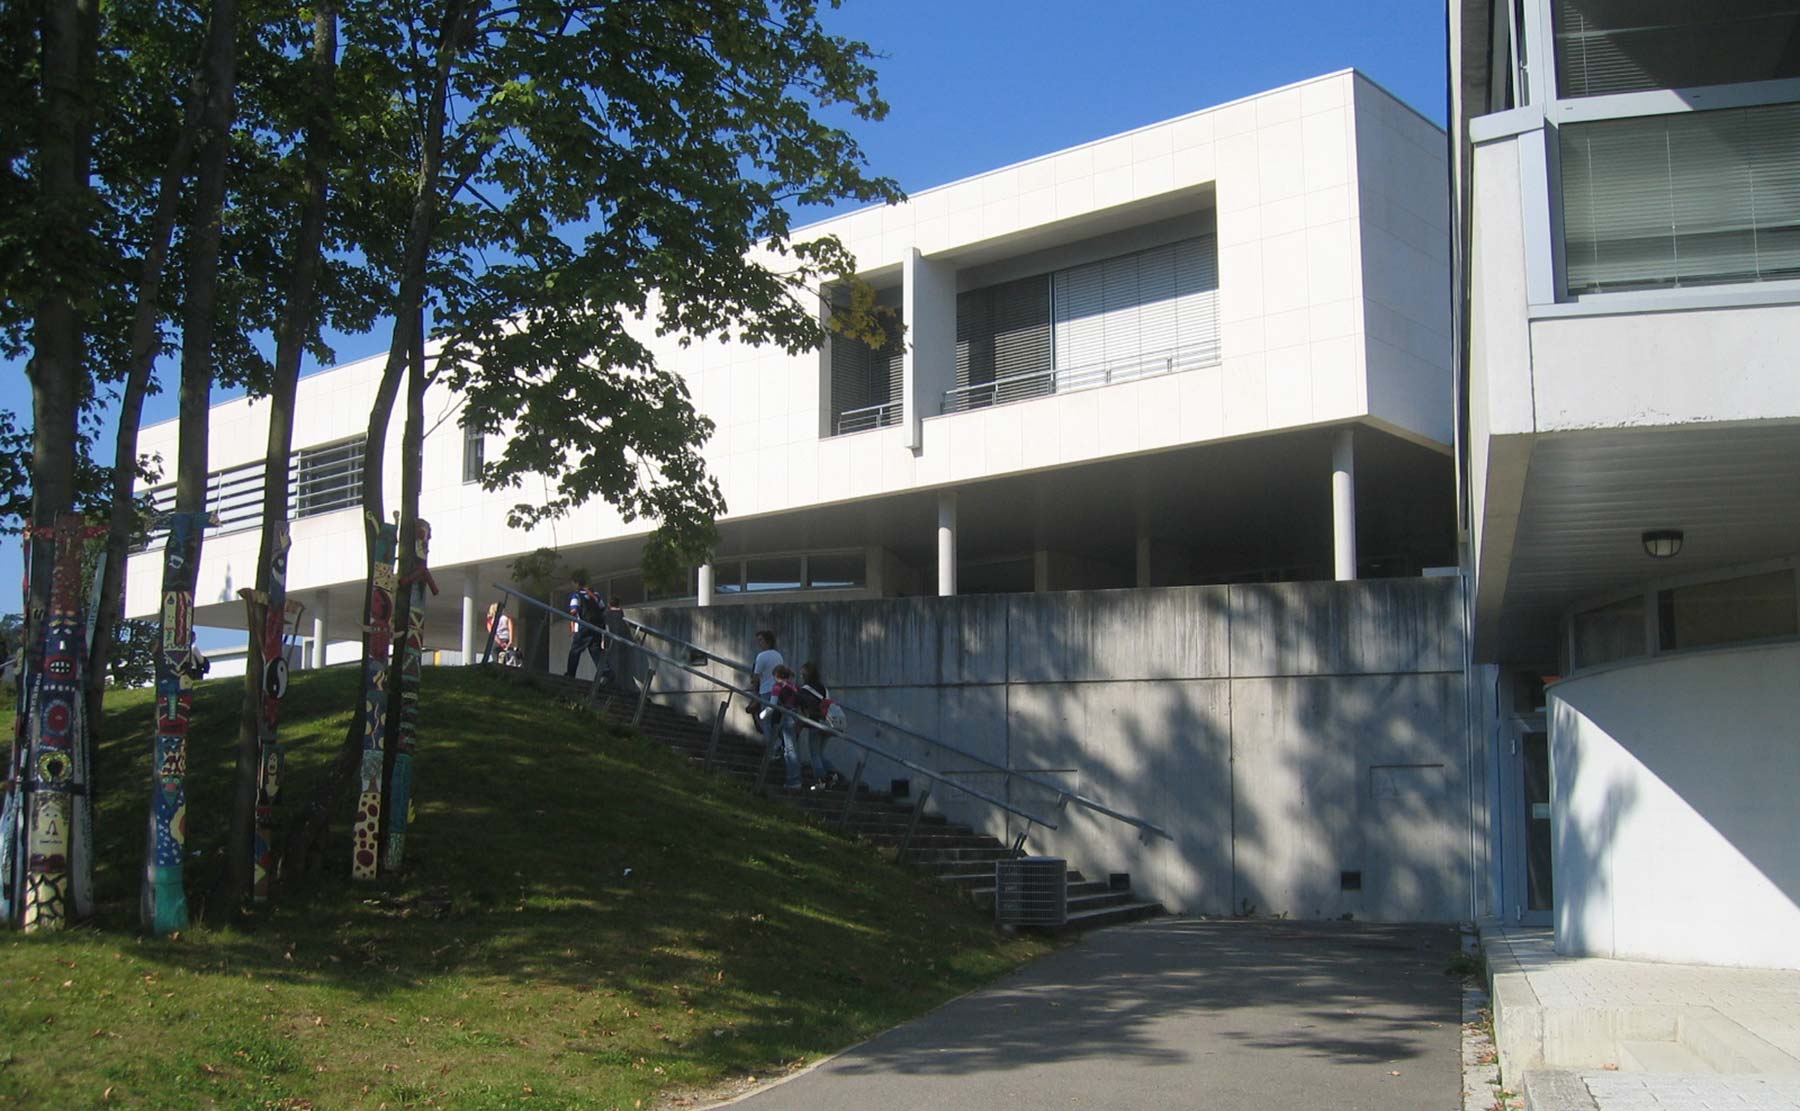  - Collège Lucien Herr, Collège Idéal / Altkirch